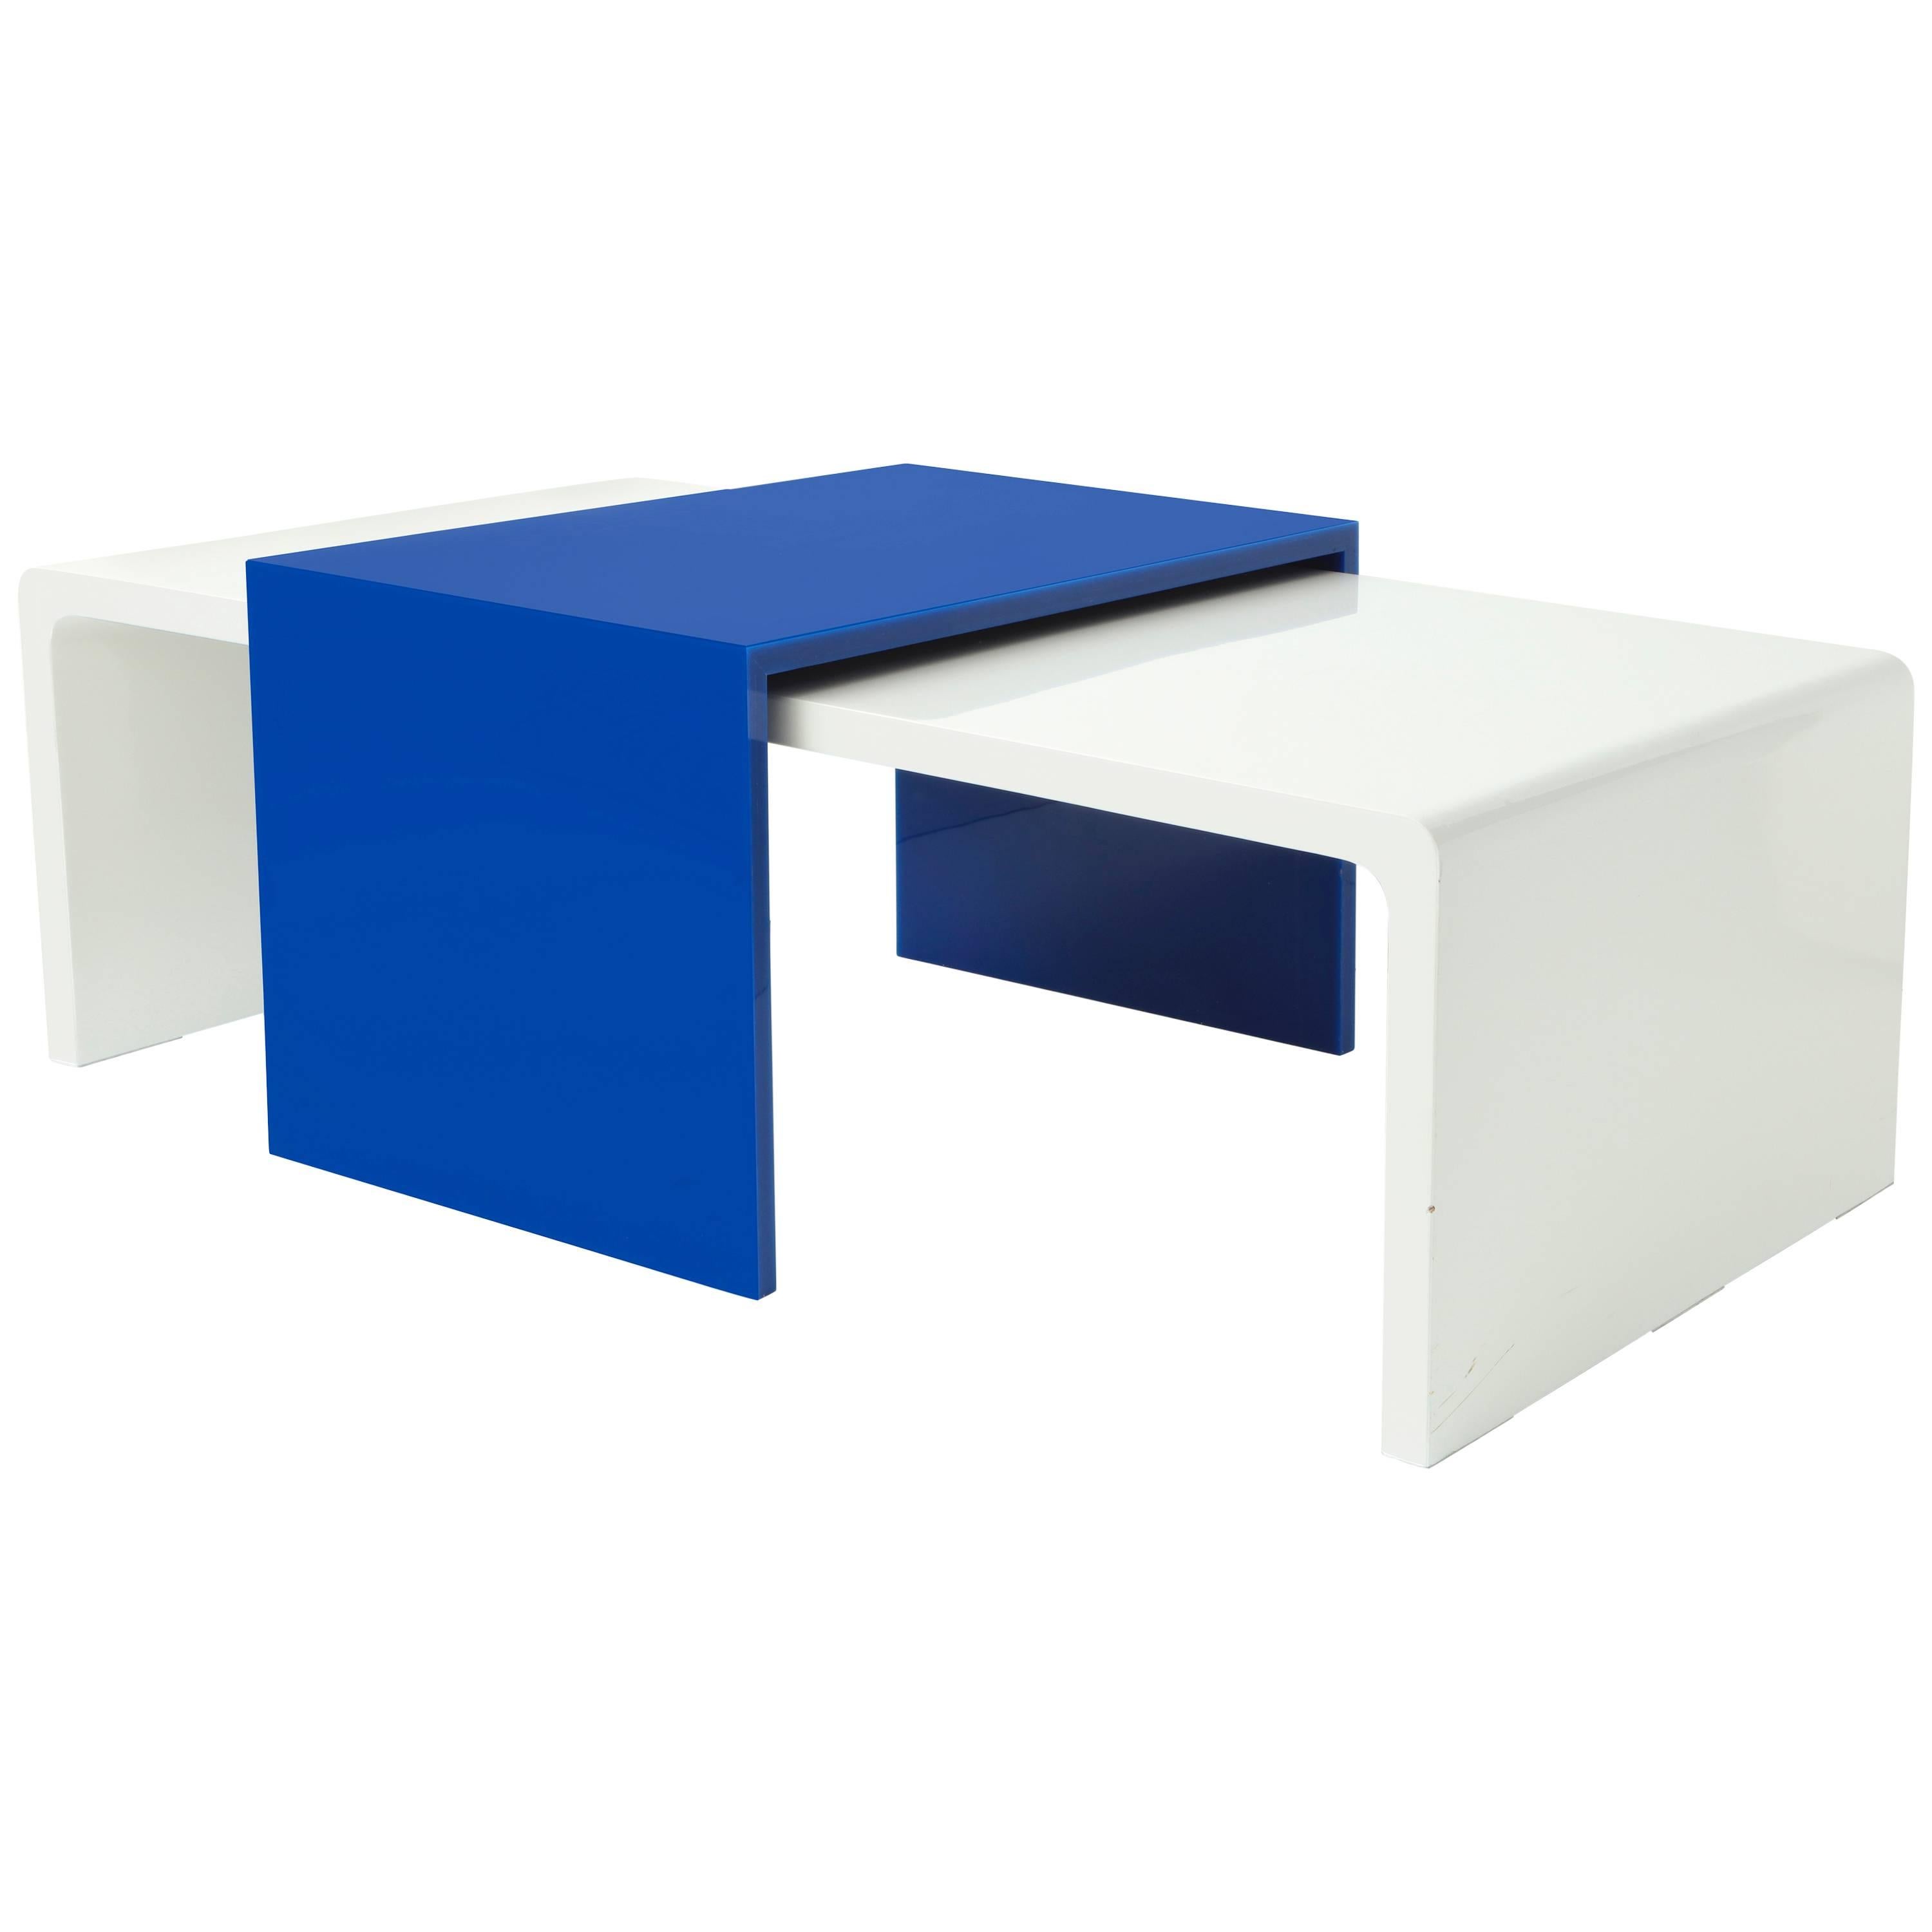 Azul and White Acrylic Coffee Table